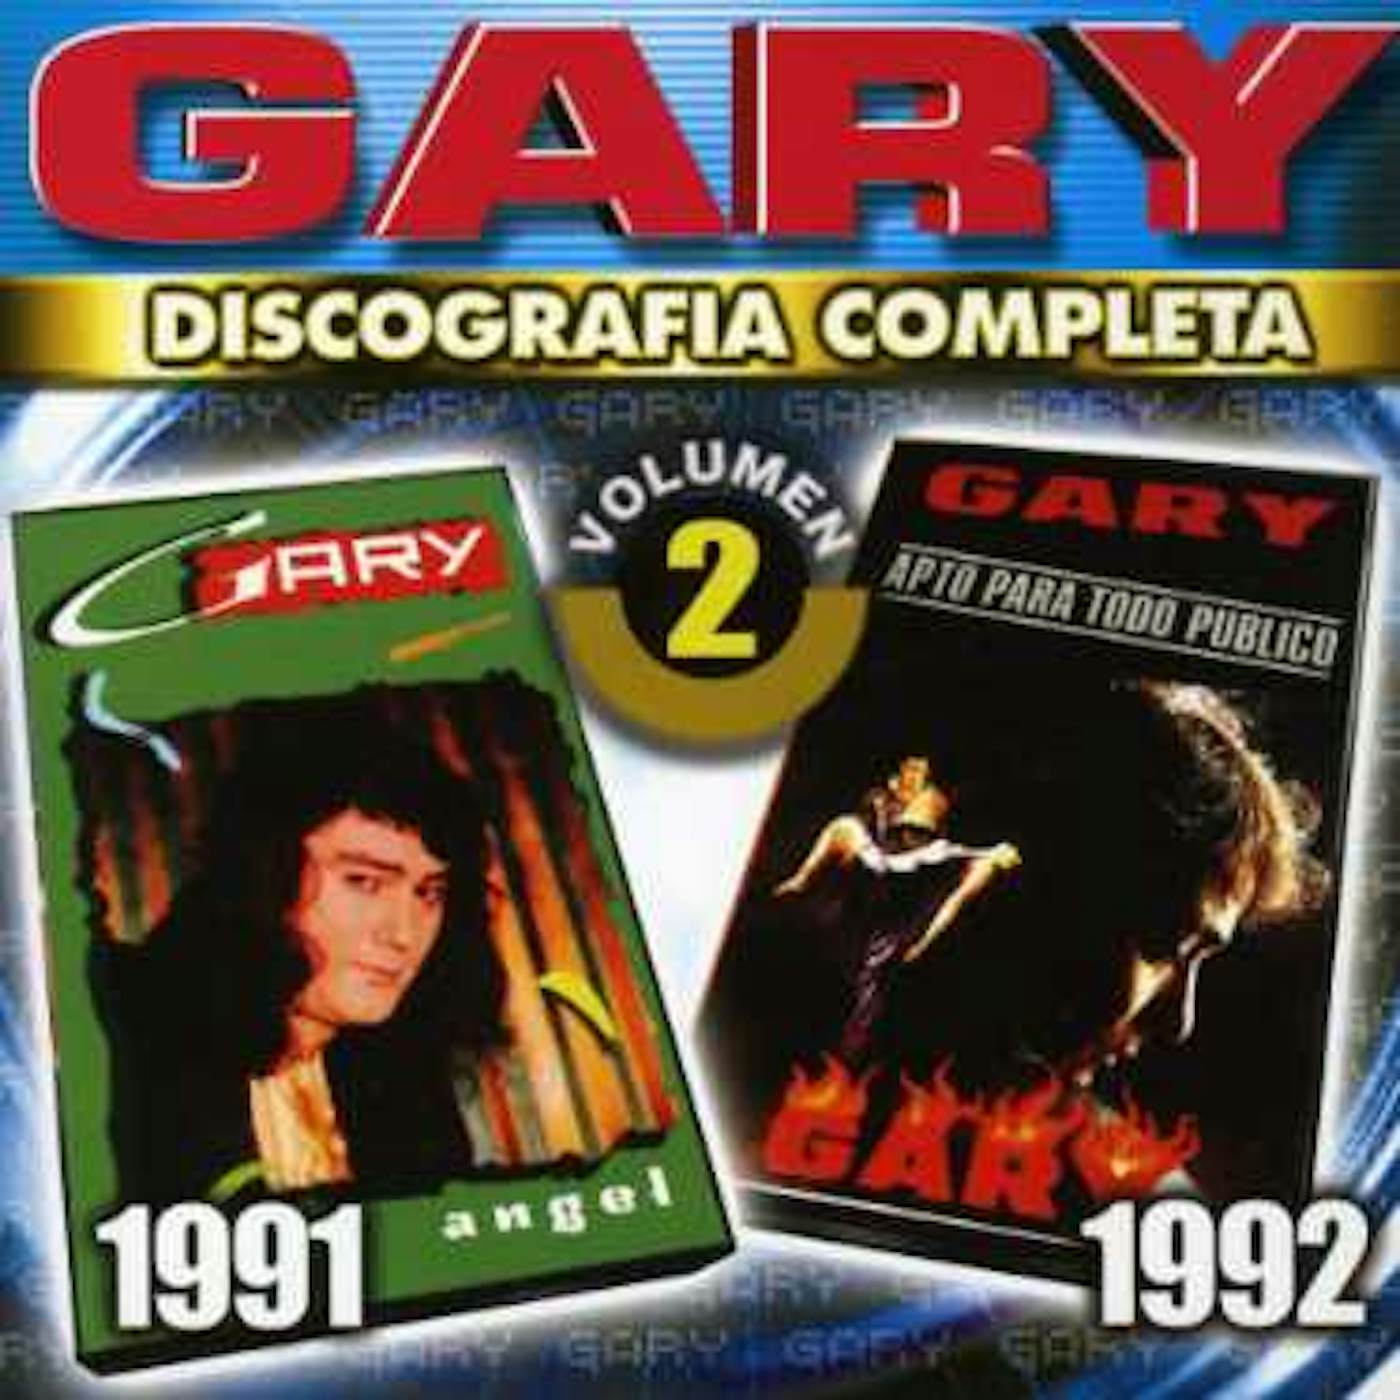 GARY DISCOGRAFIA COMPLETA 2 CD